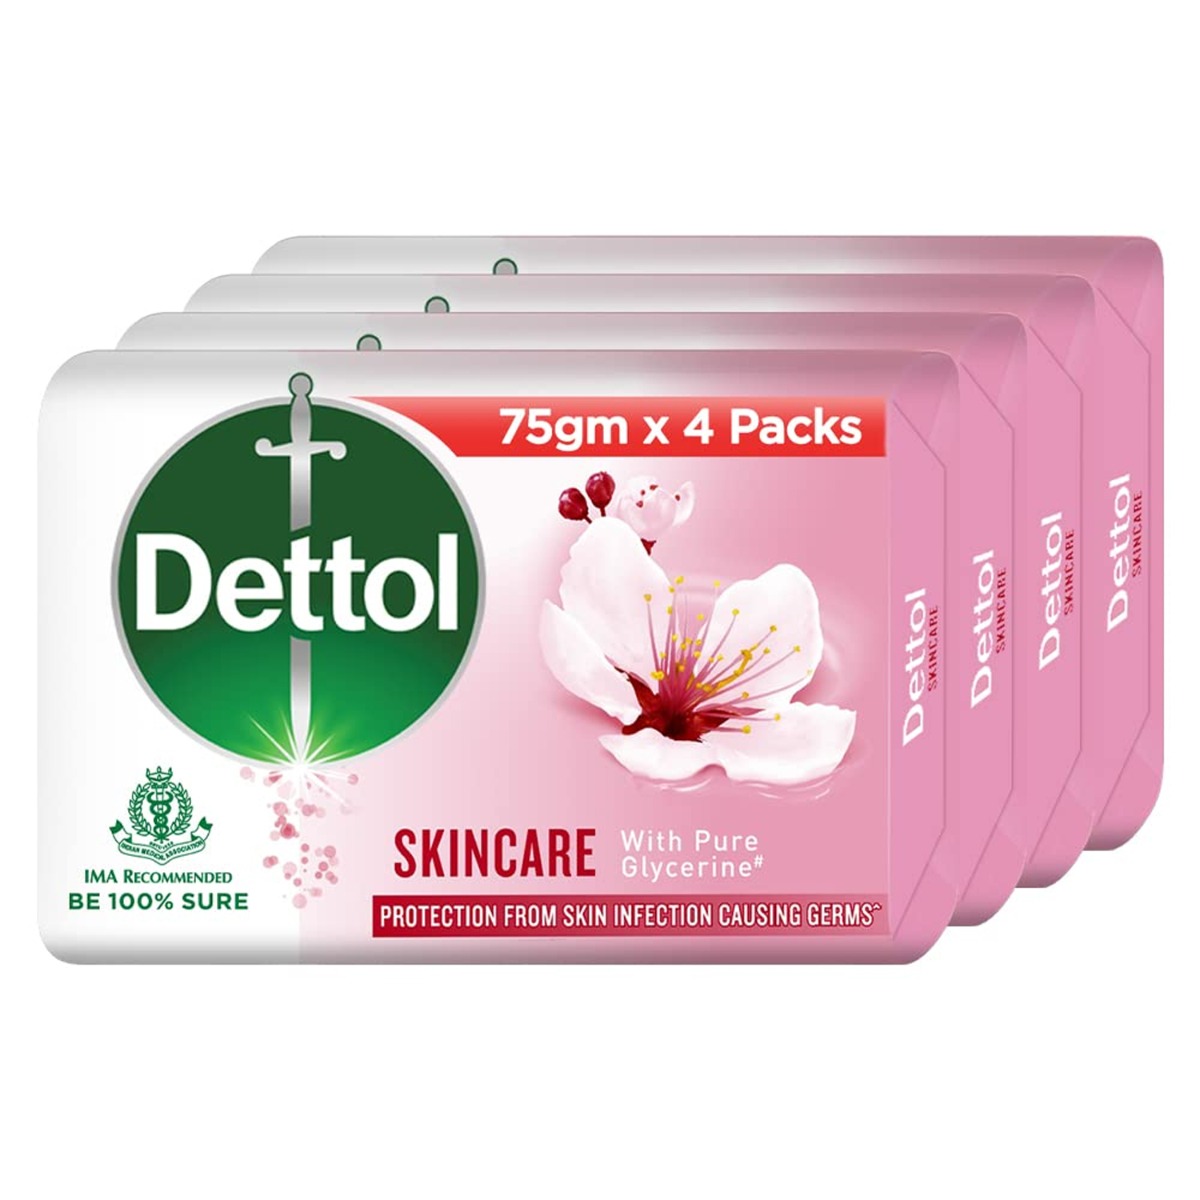 Dettol Skincare Soap - Pack of 4, 75gm